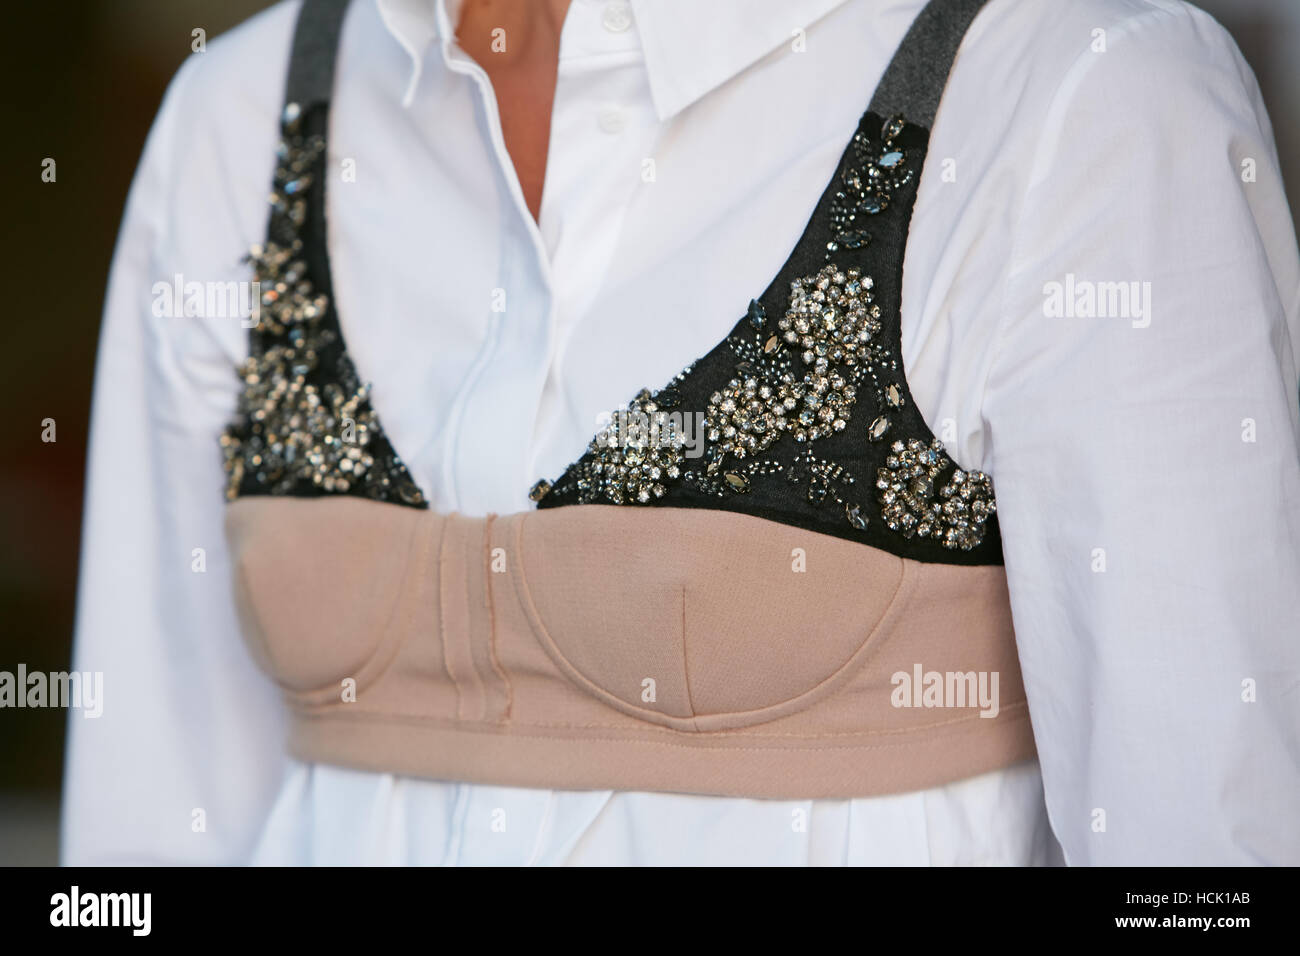 https://c8.alamy.com/comp/HCK1AB/woman-with-gems-decorated-bra-on-white-shirt-before-jil-sander-fashion-HCK1AB.jpg